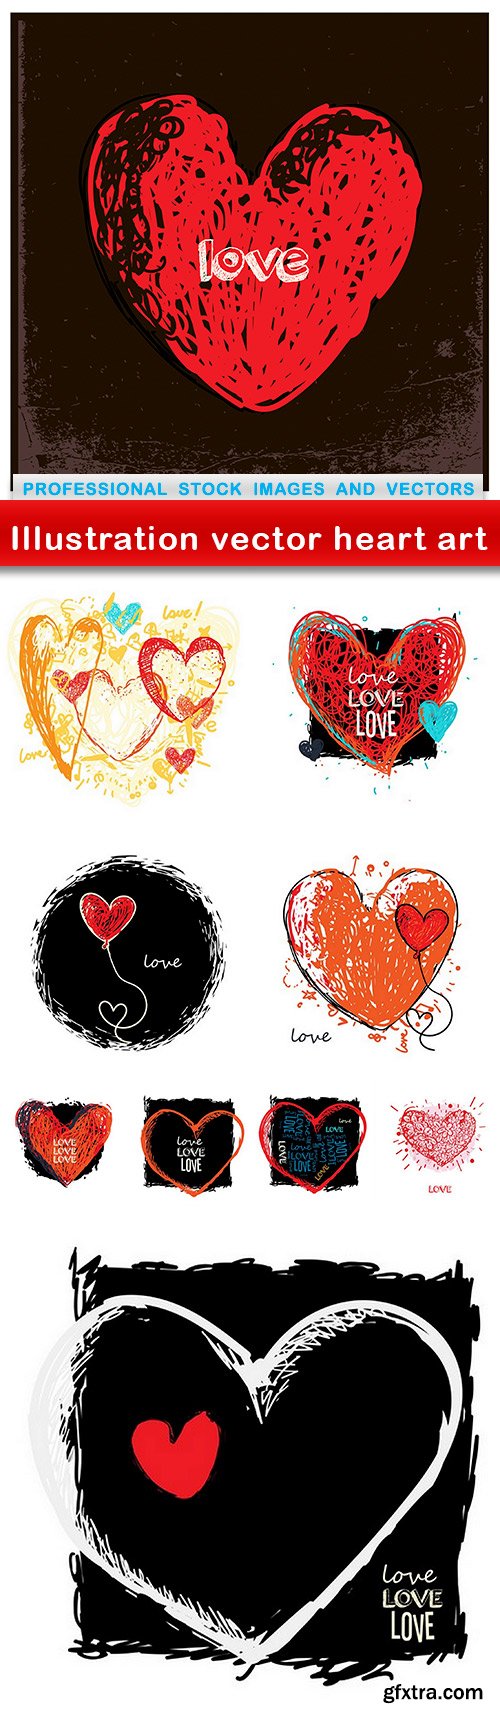 Illustration vector heart art - 10 EPS